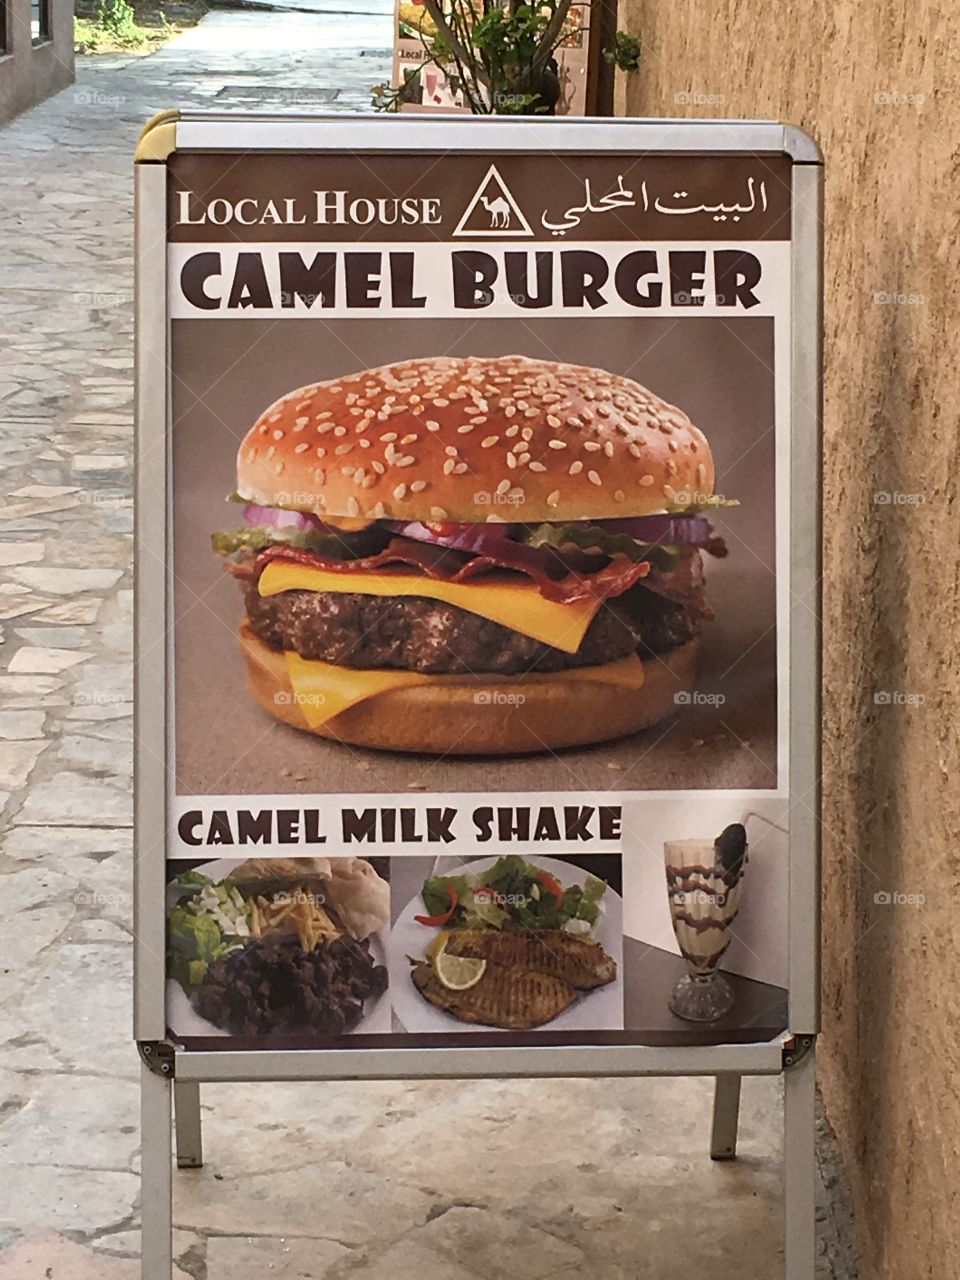 Camel burger - Bur Dubai